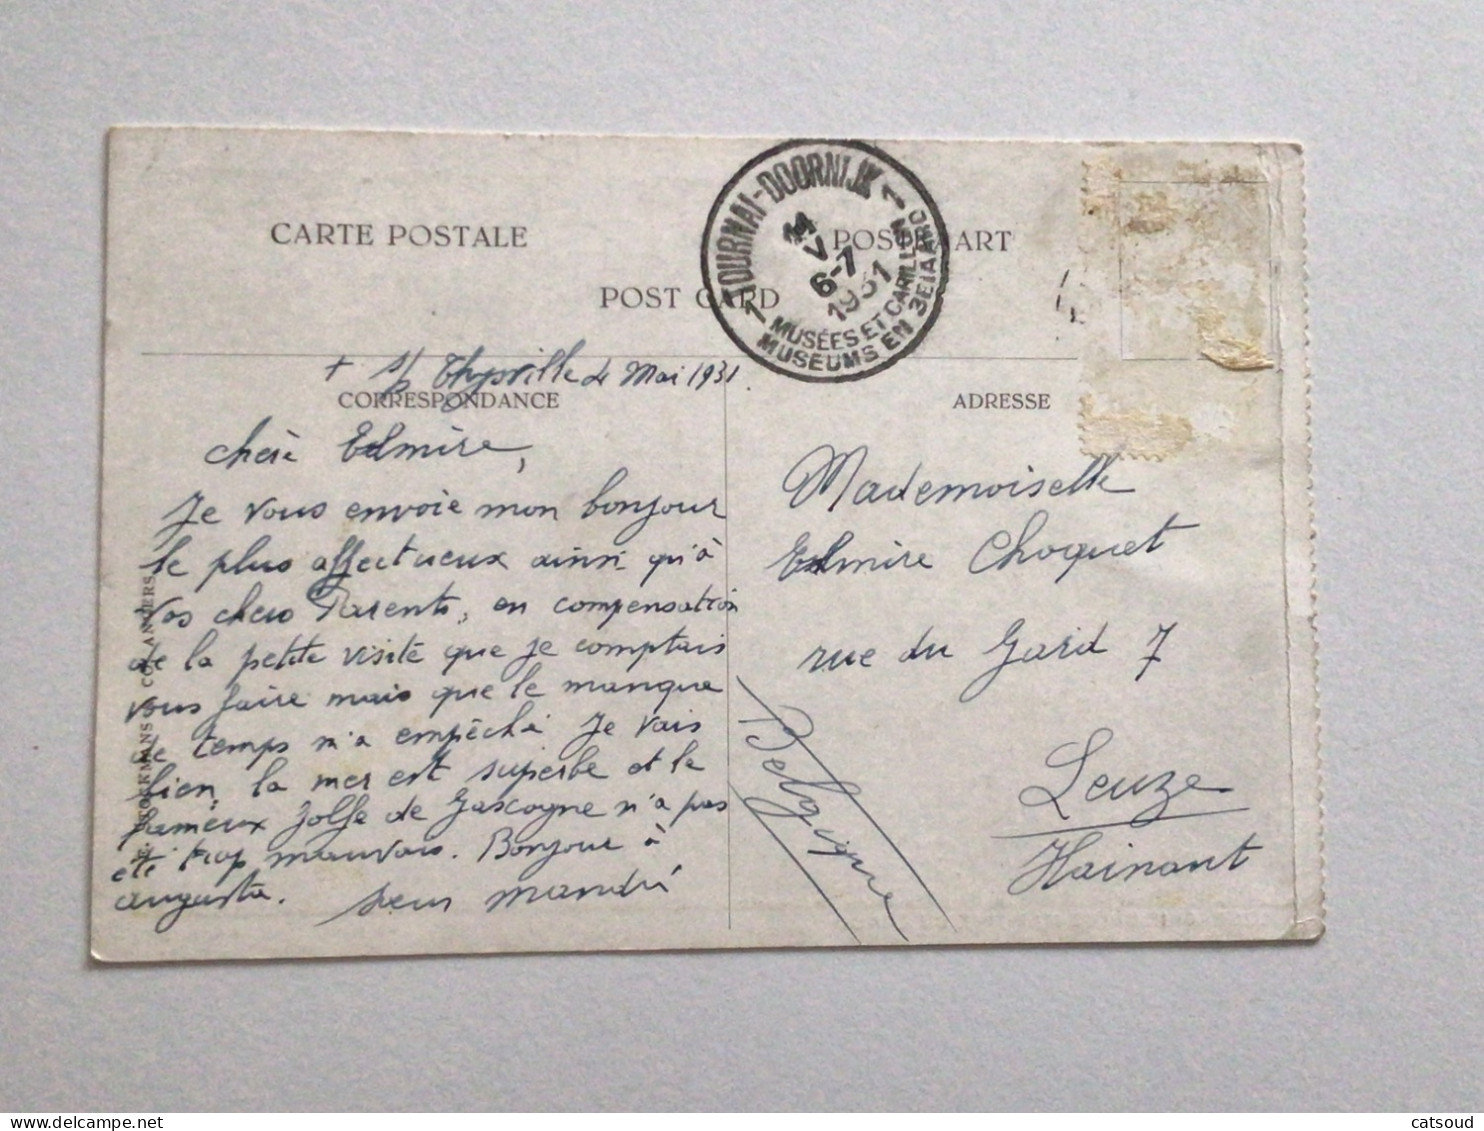 Carte Postale Ancienne (1931) Compagnie Belge Maritime Du Congo Baobab - Belgian Congo